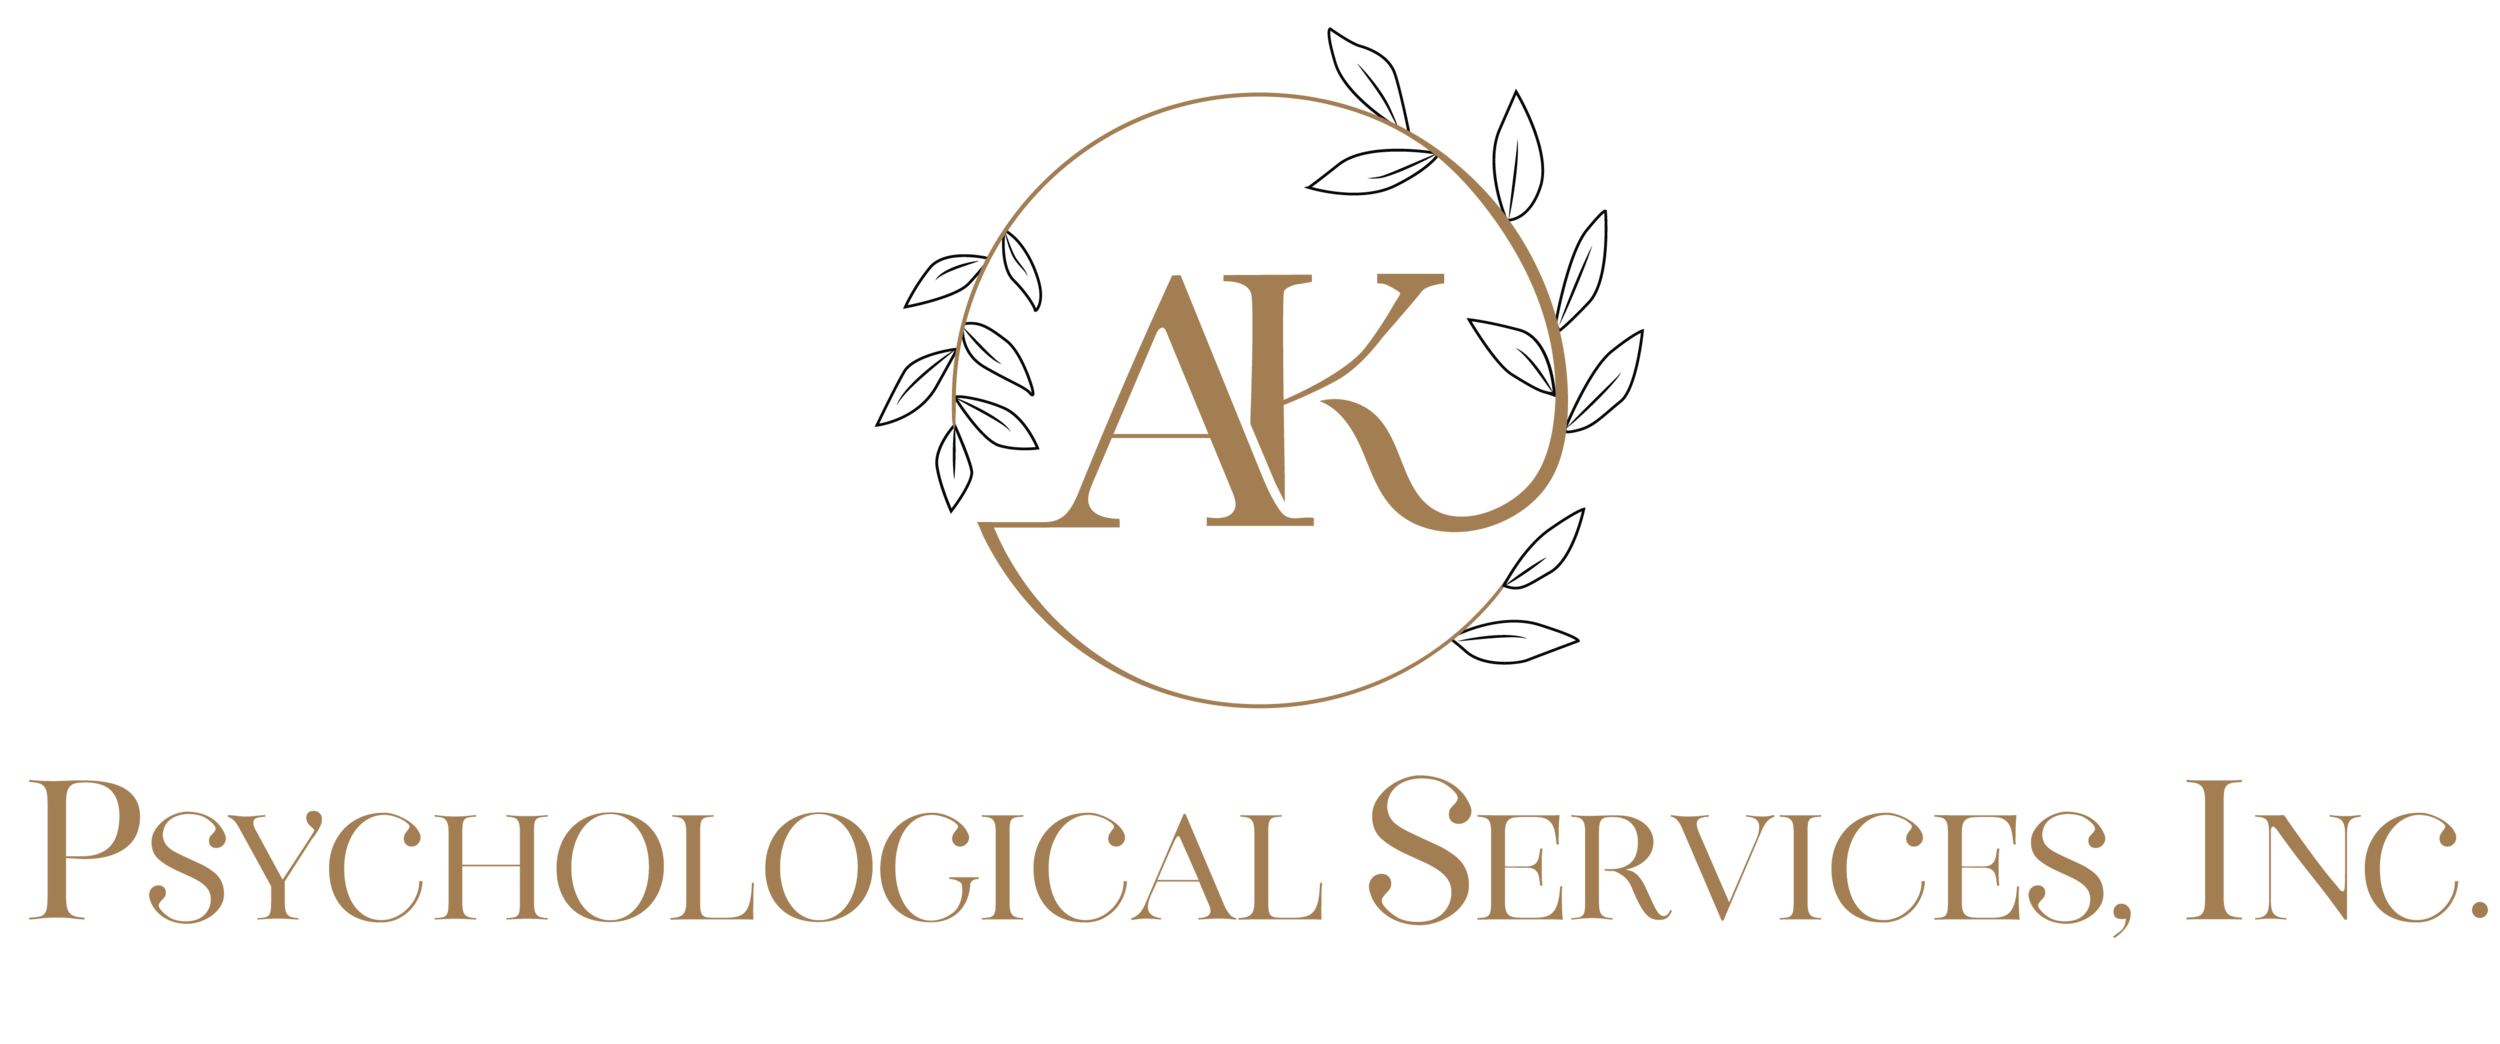 AK Psychological Services, Inc. | Dr. Anna Kafka, Psy.D.